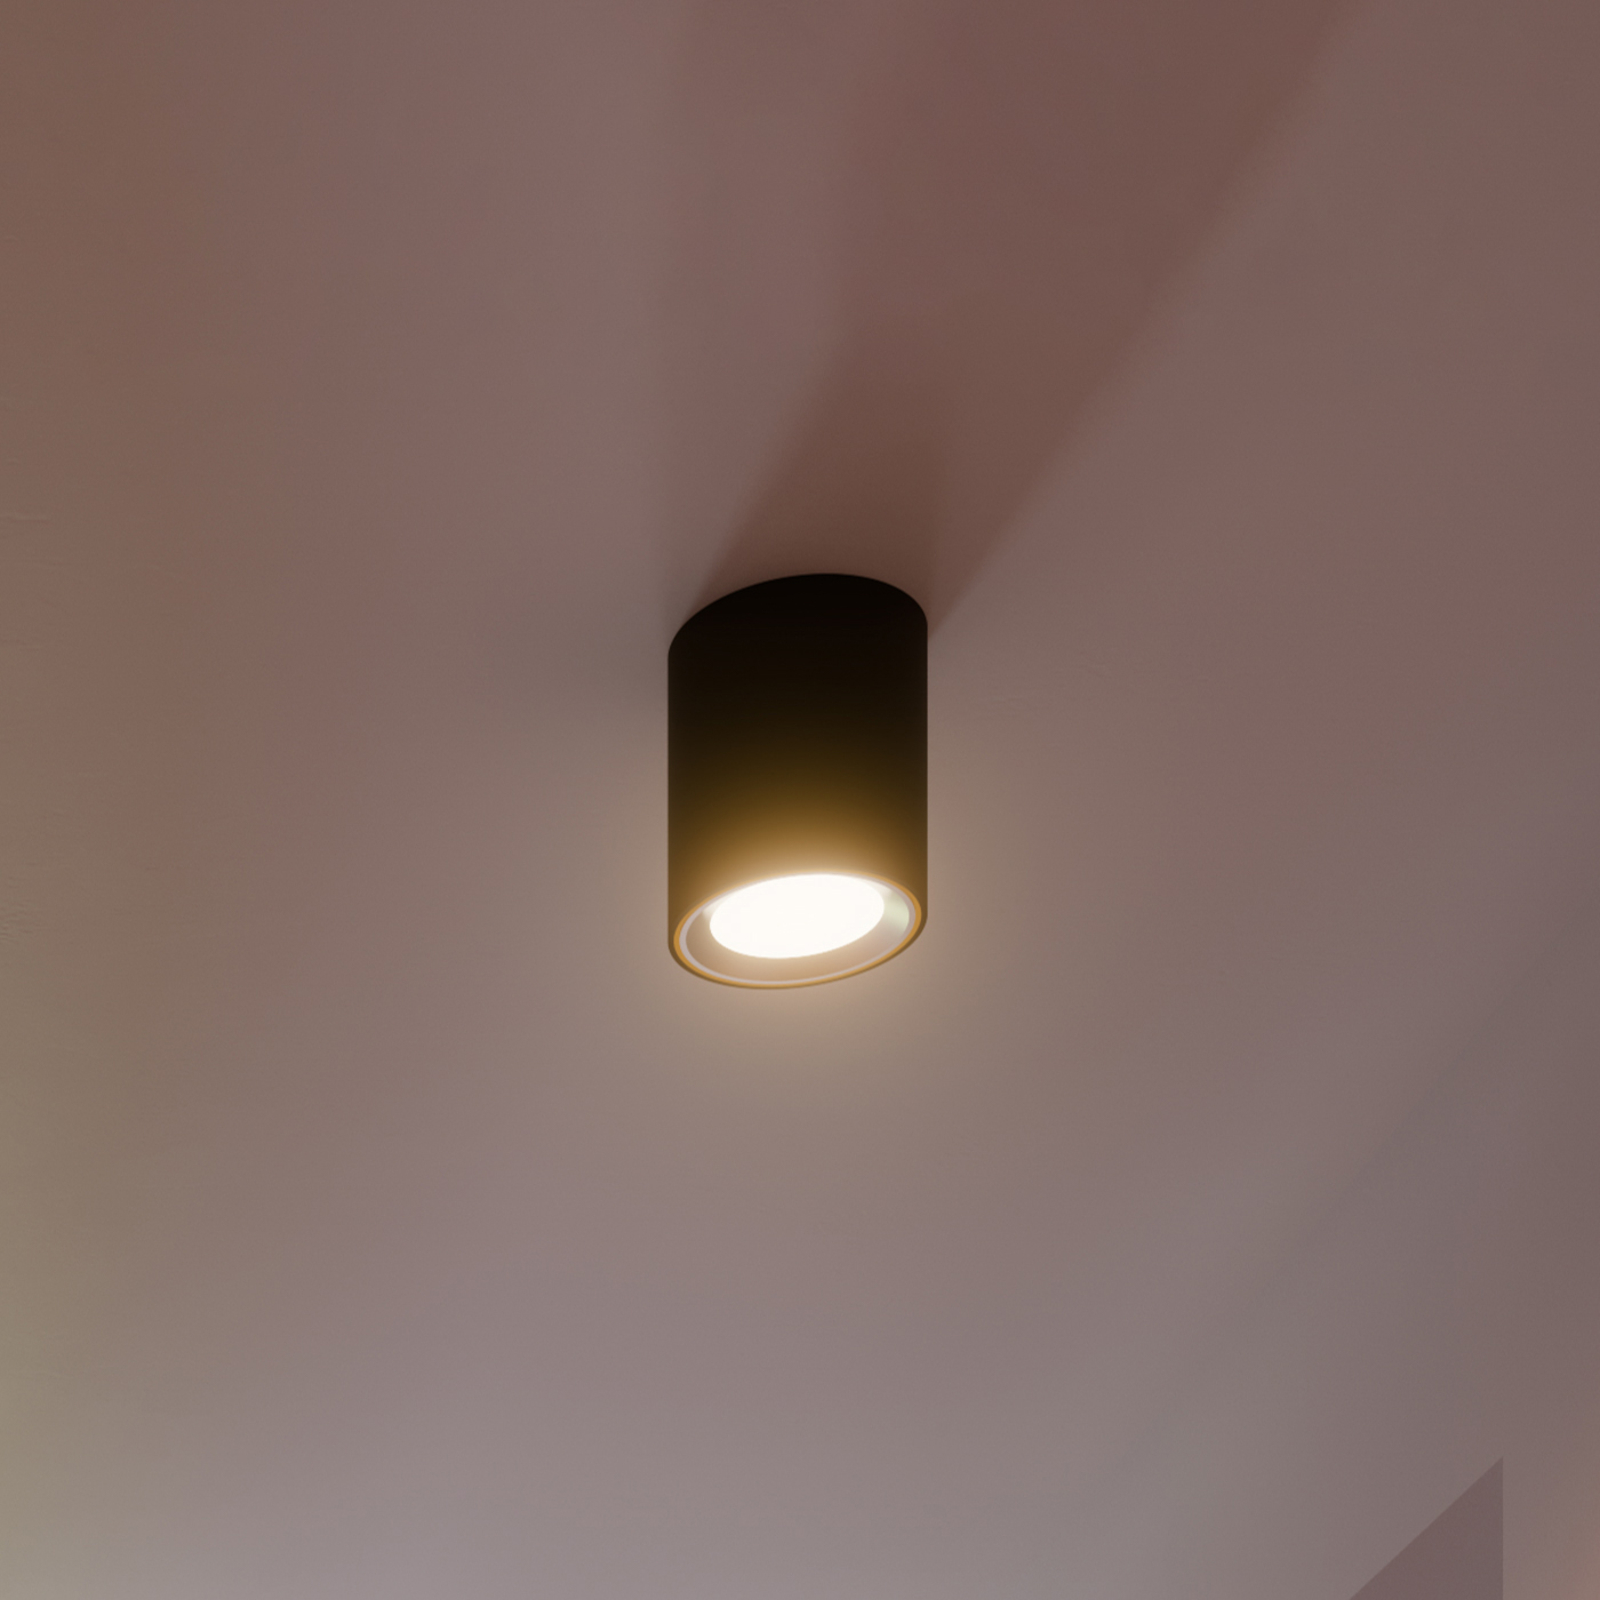 LED plafondspot Landon Smart, zwart, hoogte 14 cm